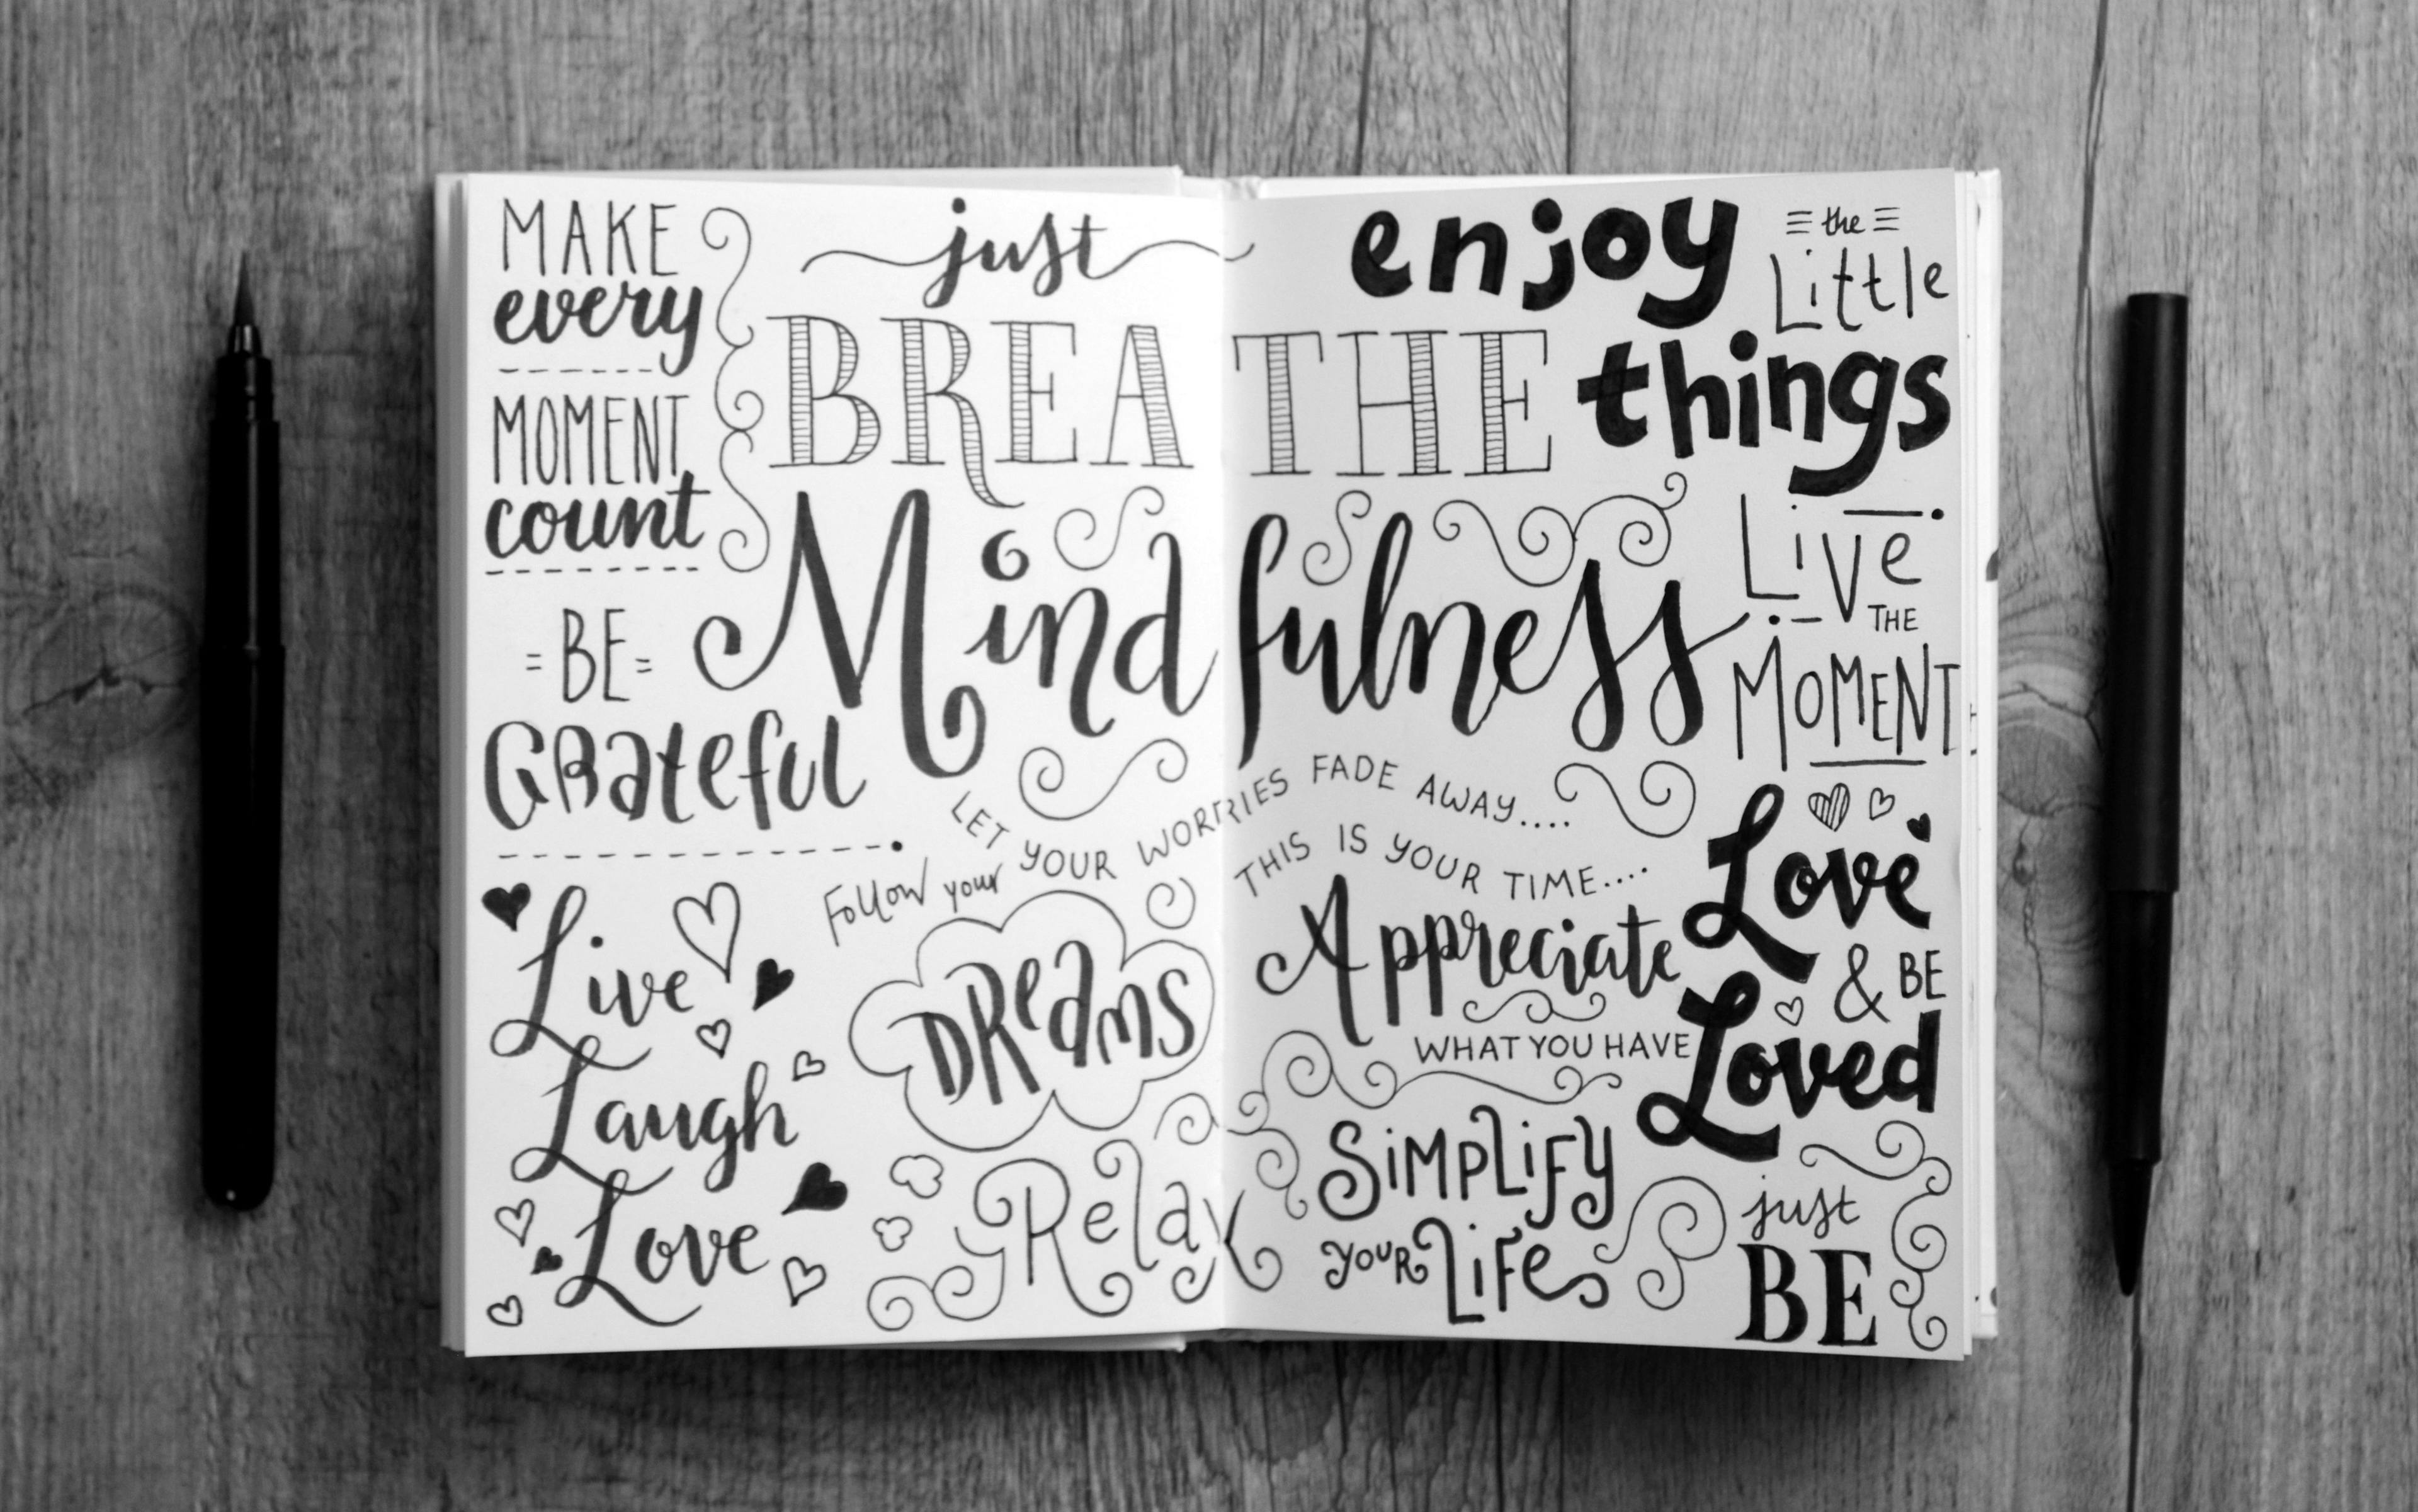 Mindfulness hand-lettered sketch notes | Image credit: treenabeena - stock.adobe.com